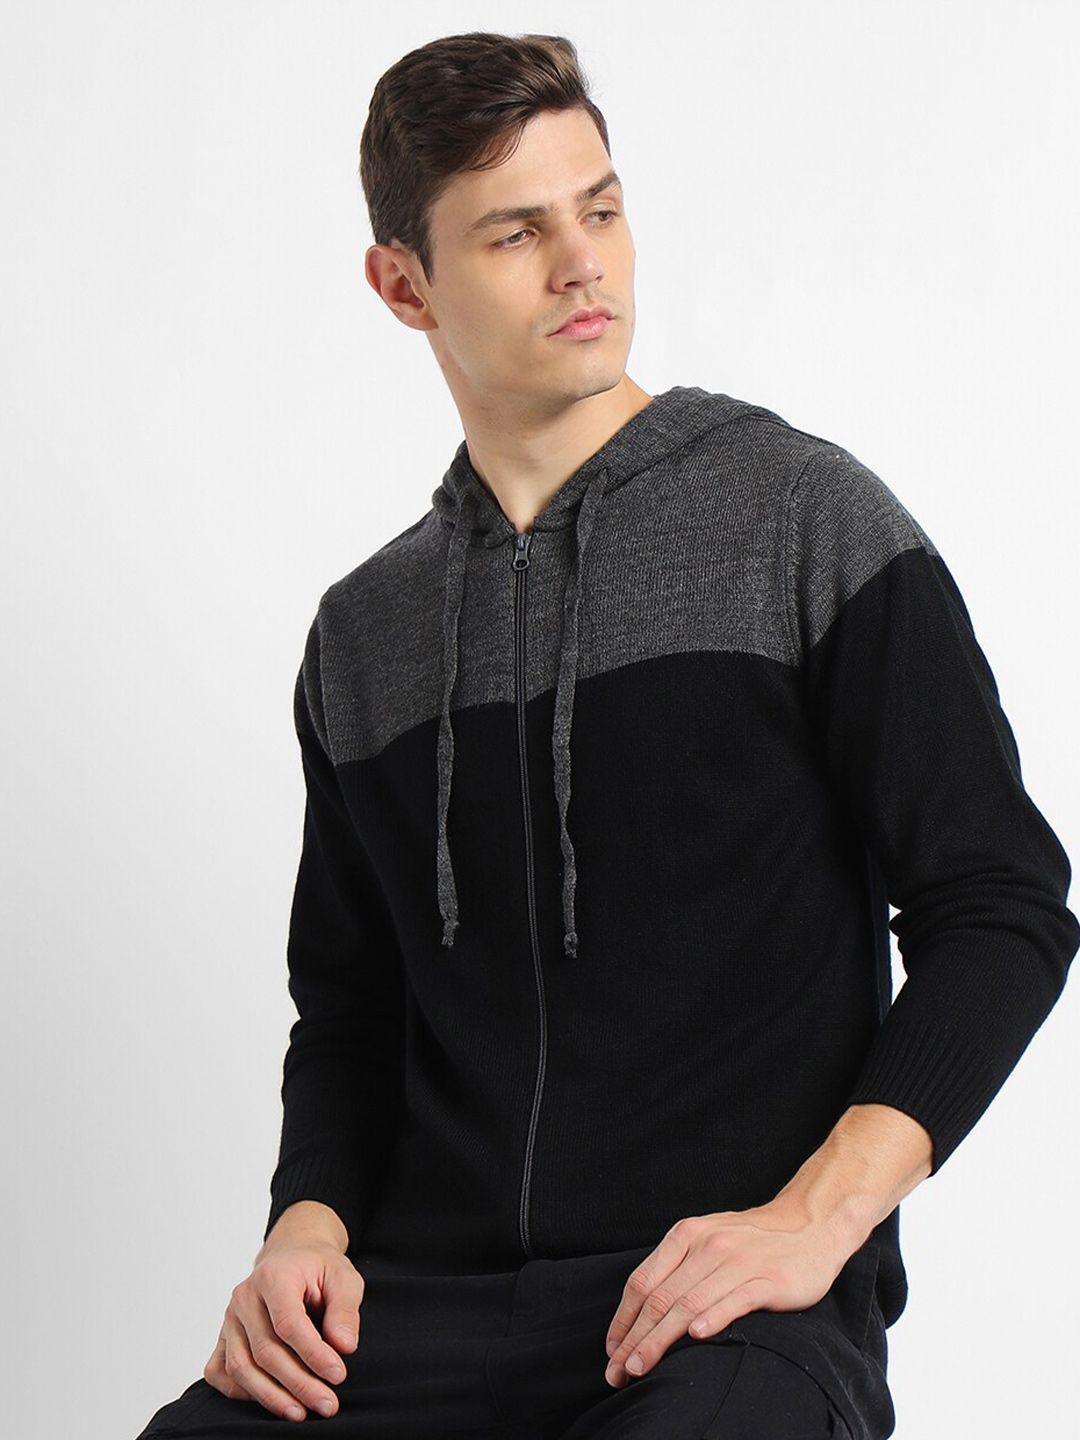 dennis-lingo-colourblocked-hooded-neck-long-sleeves-acrylic-cardigan-sweater